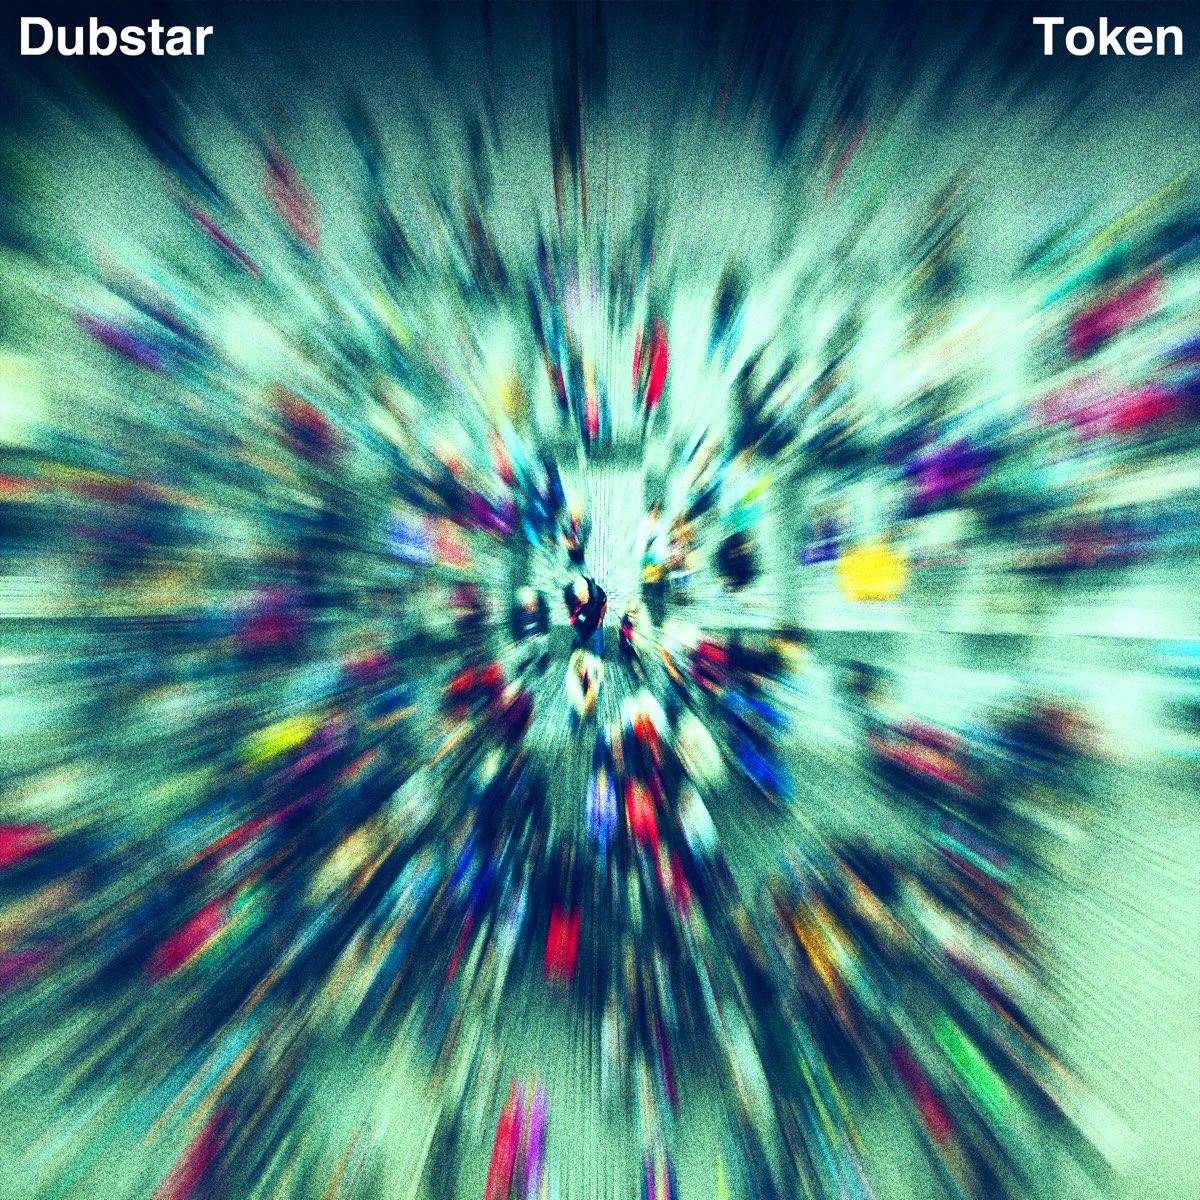 Dubstar Token cover artwork